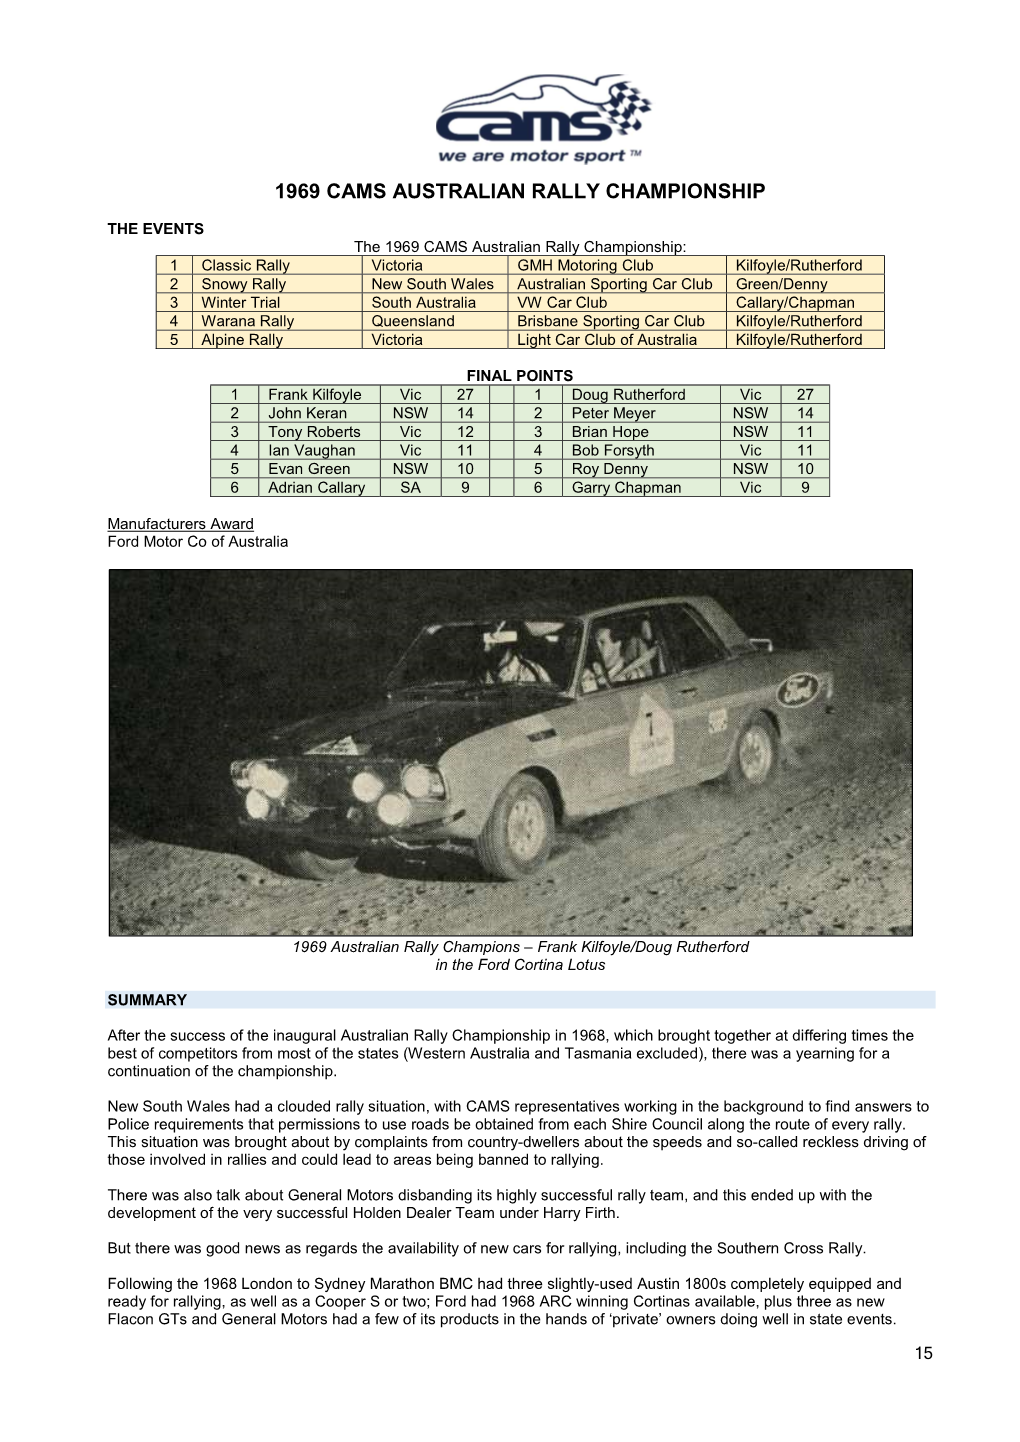 1969 Cams Australian Rally Championship